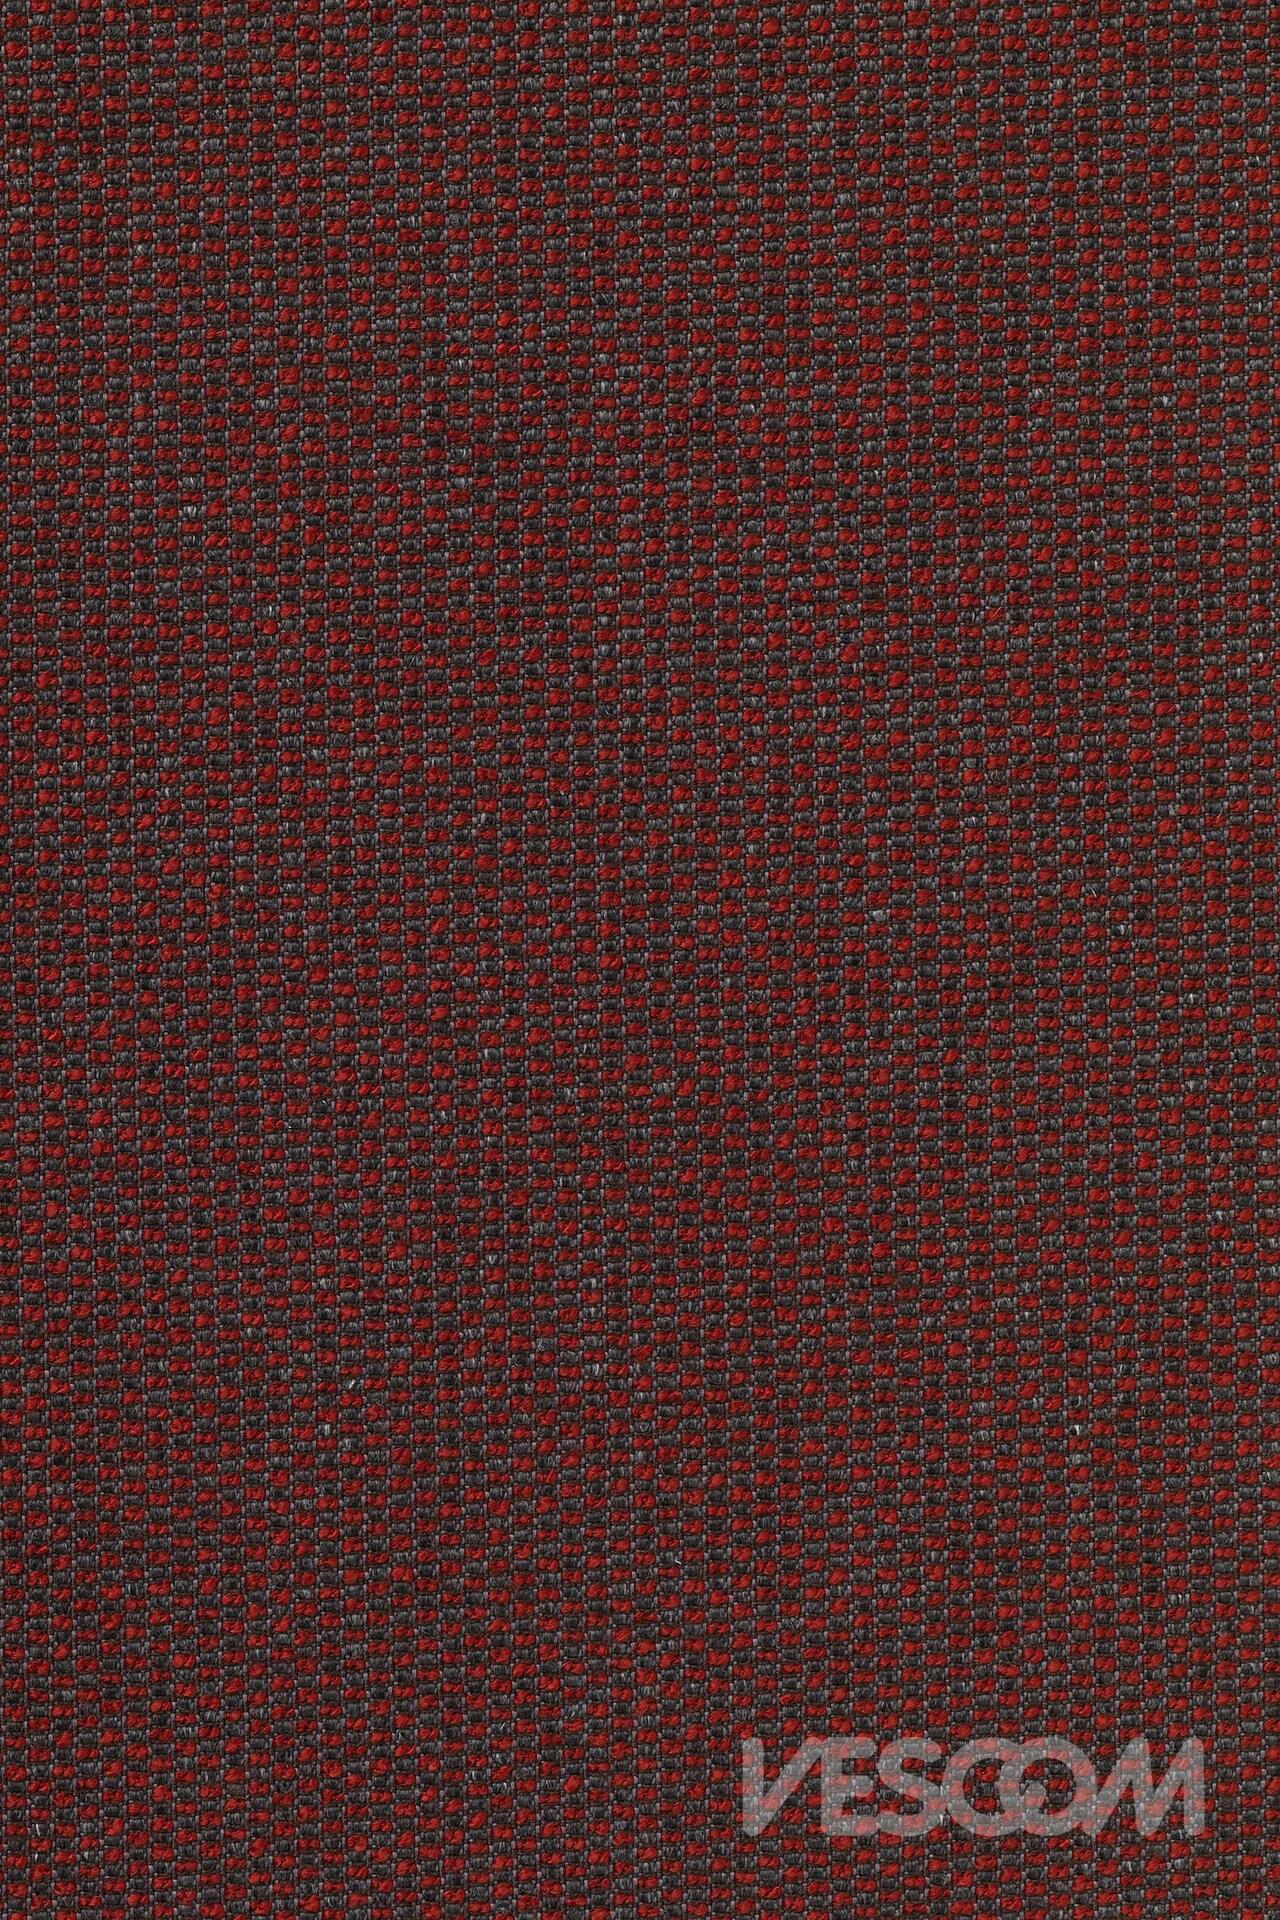 Vescom-Burton-Upholstery-Fabric-7056.08.jpg